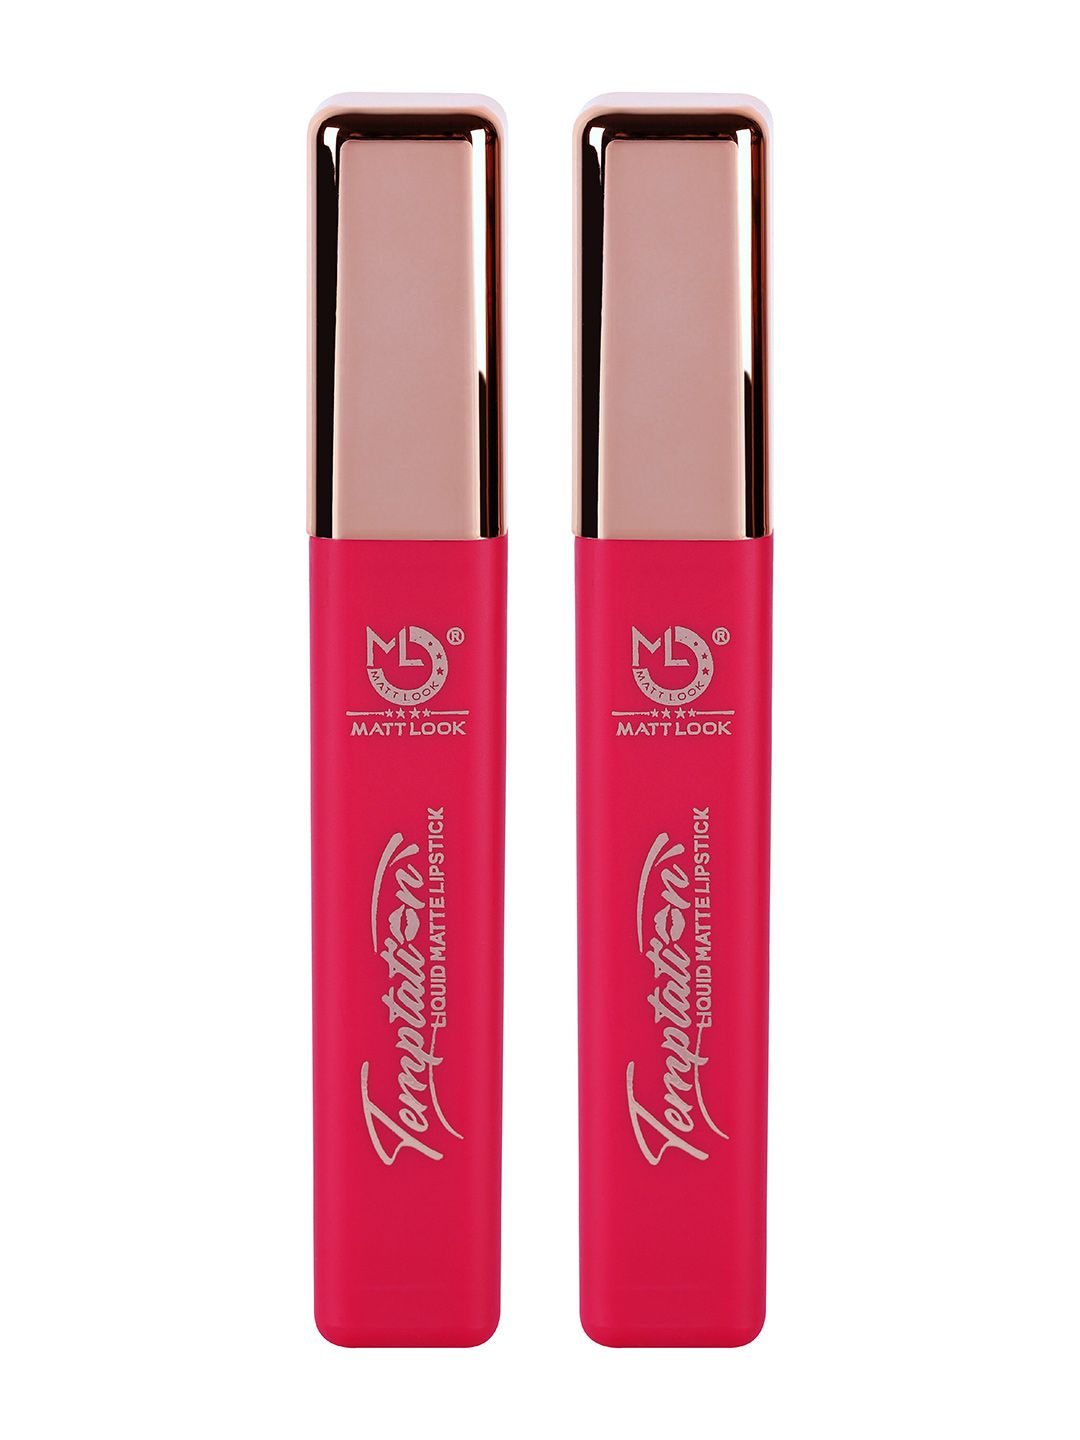 MATTLOOK Lip Makeup Temptation Liquid Matte Lipstick - Blood Red (Pack of 2) Price in India